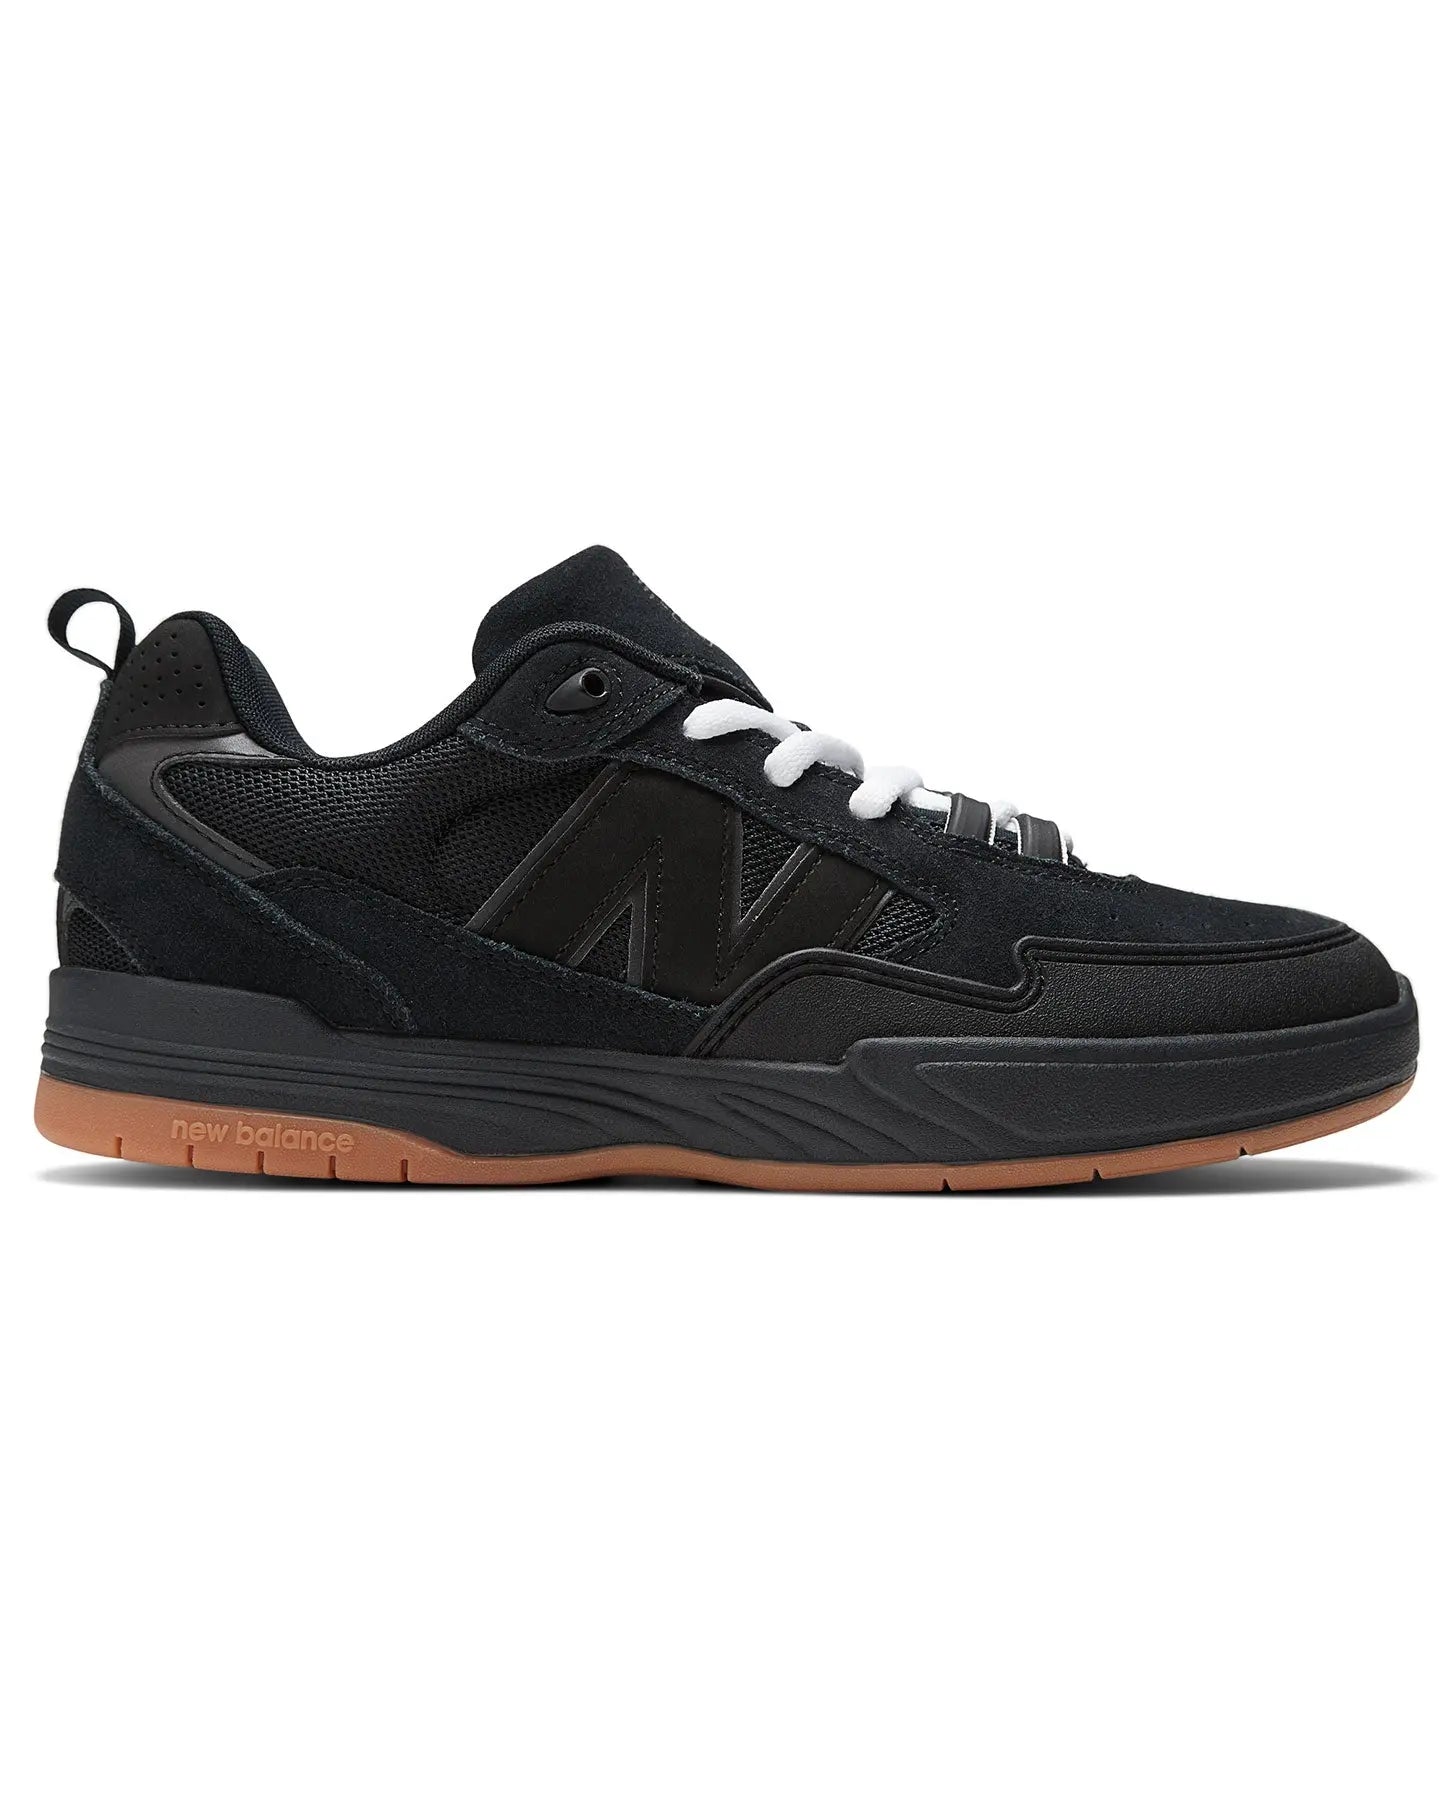 New Balance 808 - Black / Gum Footwear